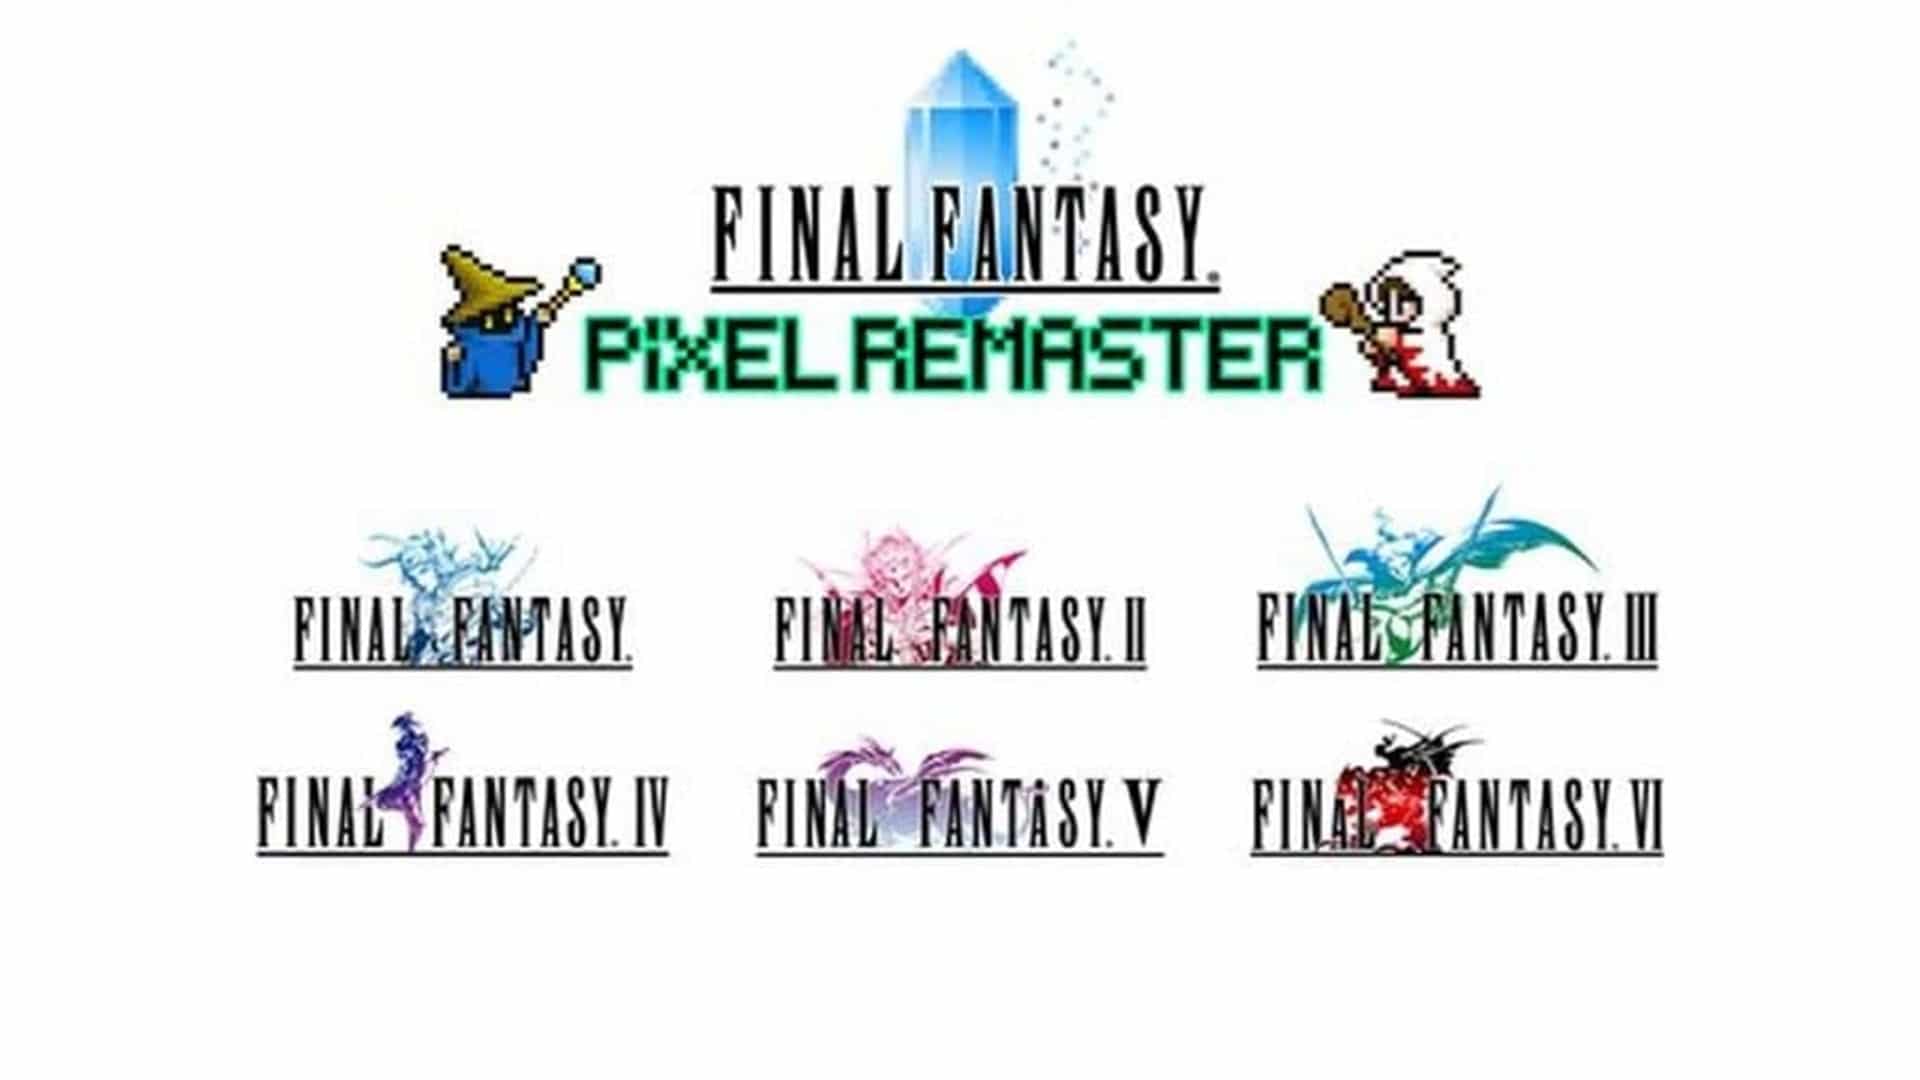 Final Fantasy Pixel Remaster se lanzará para Switch en 2022, según rumor, GamersRD